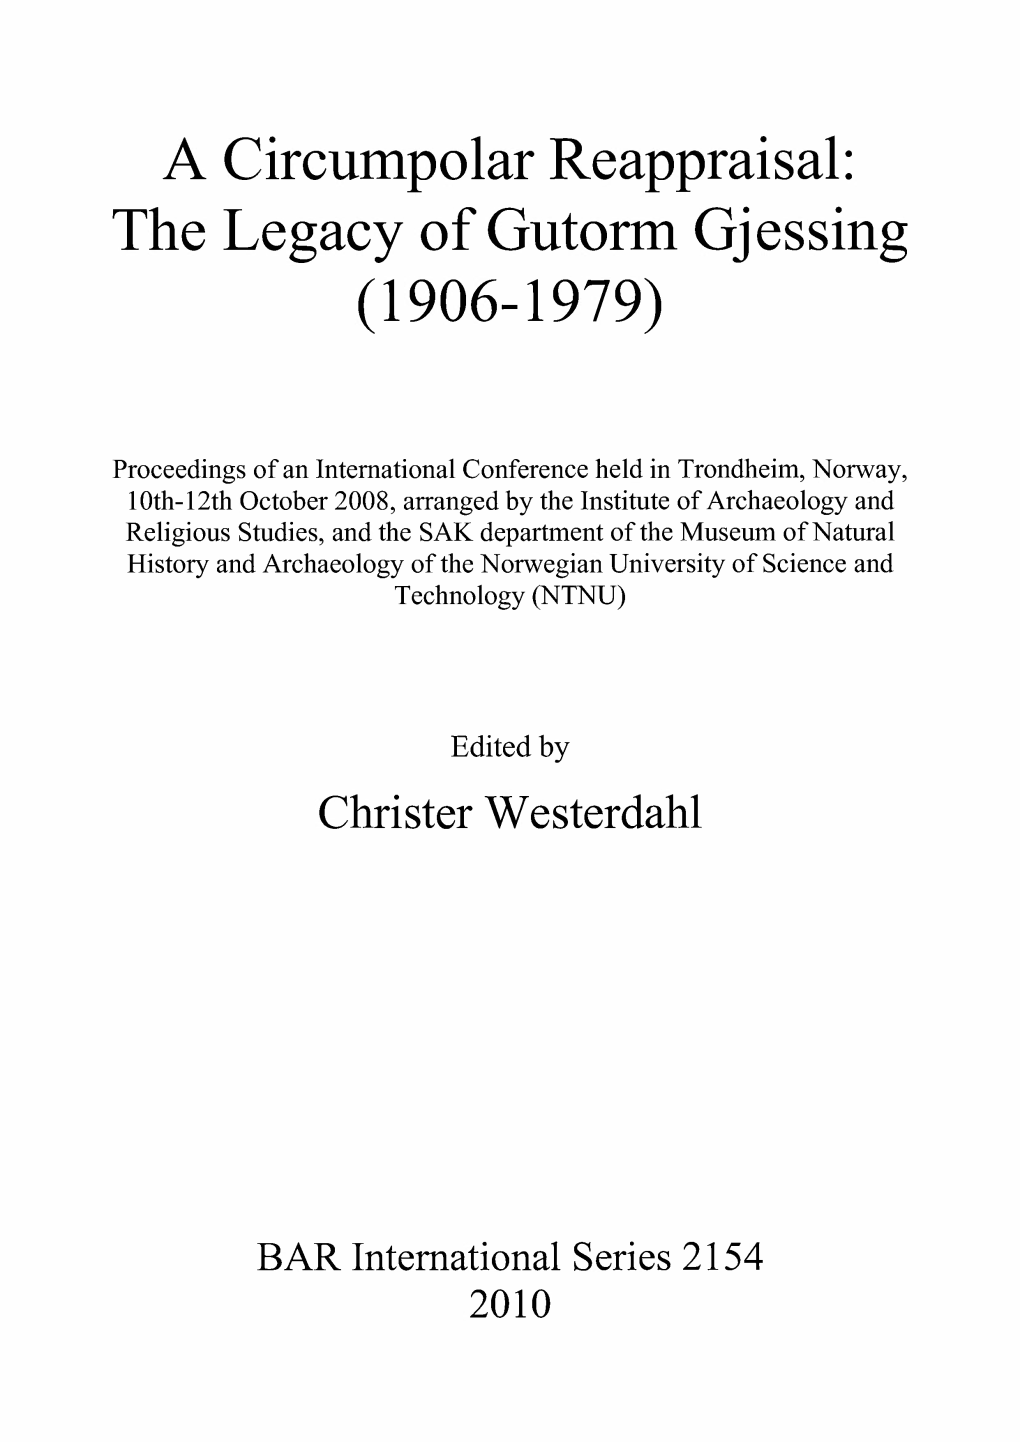 A Circumpolar Reappraisal: the Legacy of Gutorm Gjessing (1906-1979)